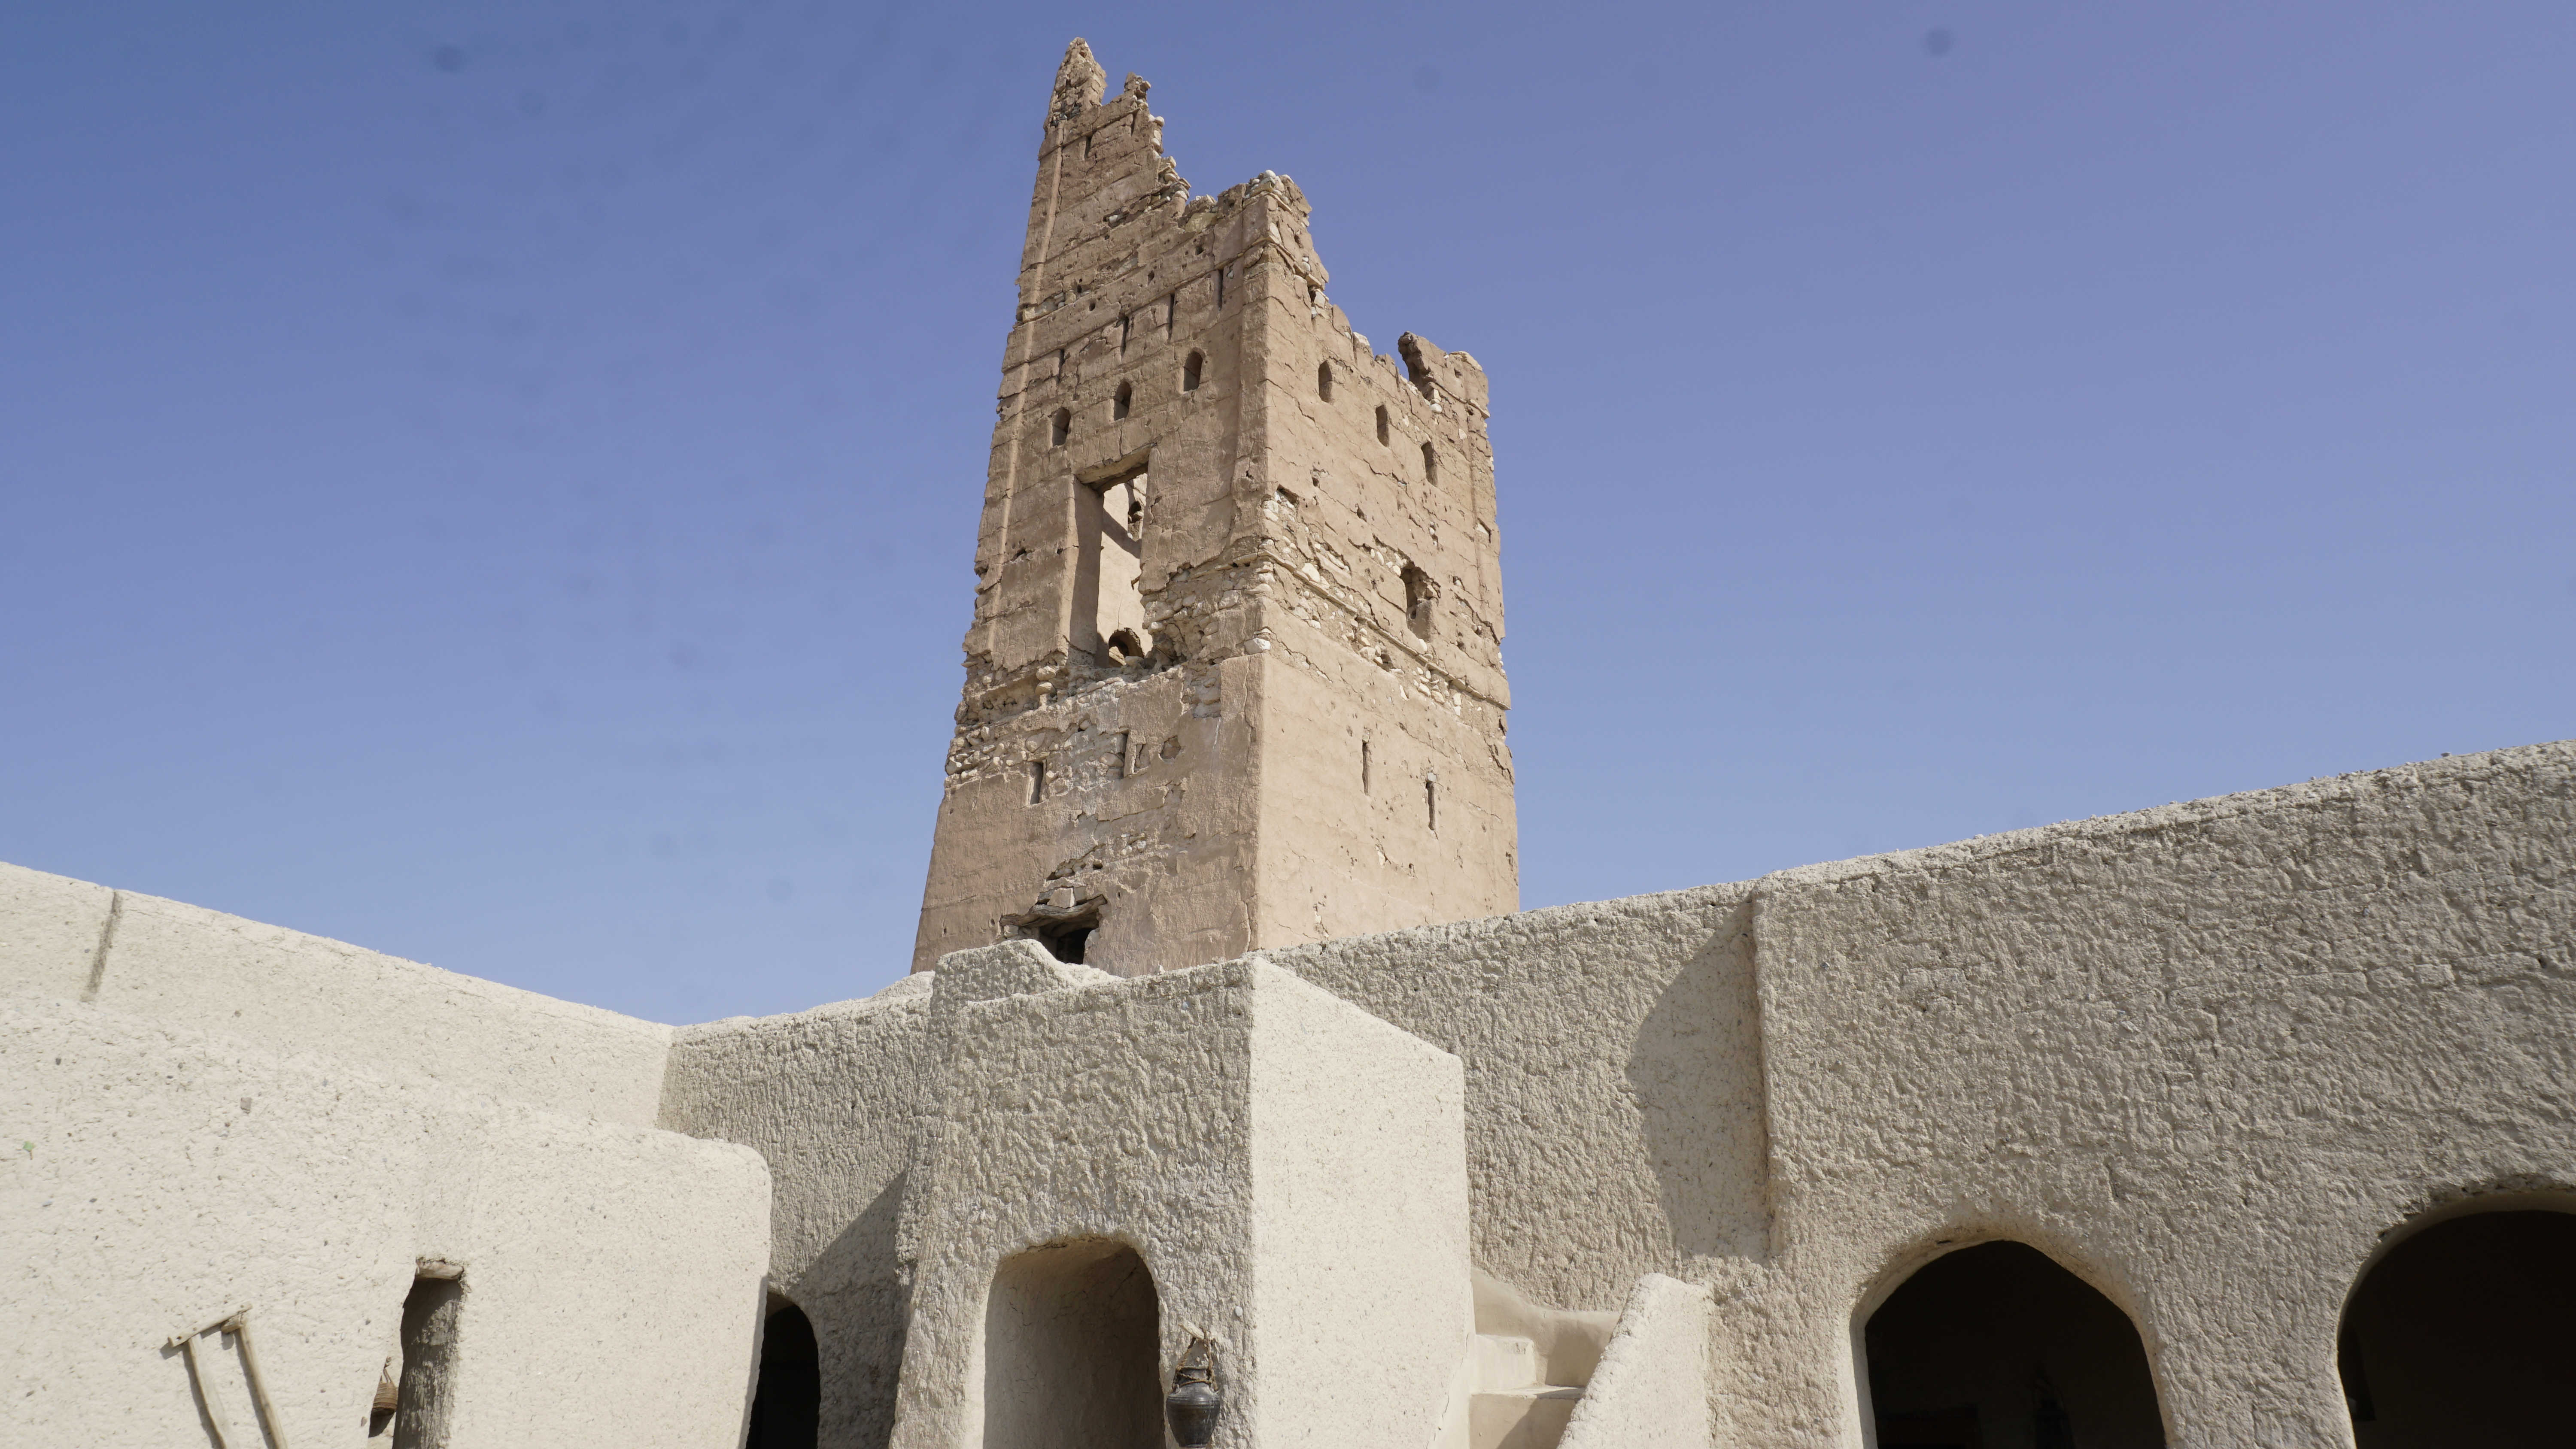 Harat Al Bilad historic site handed over to local firm